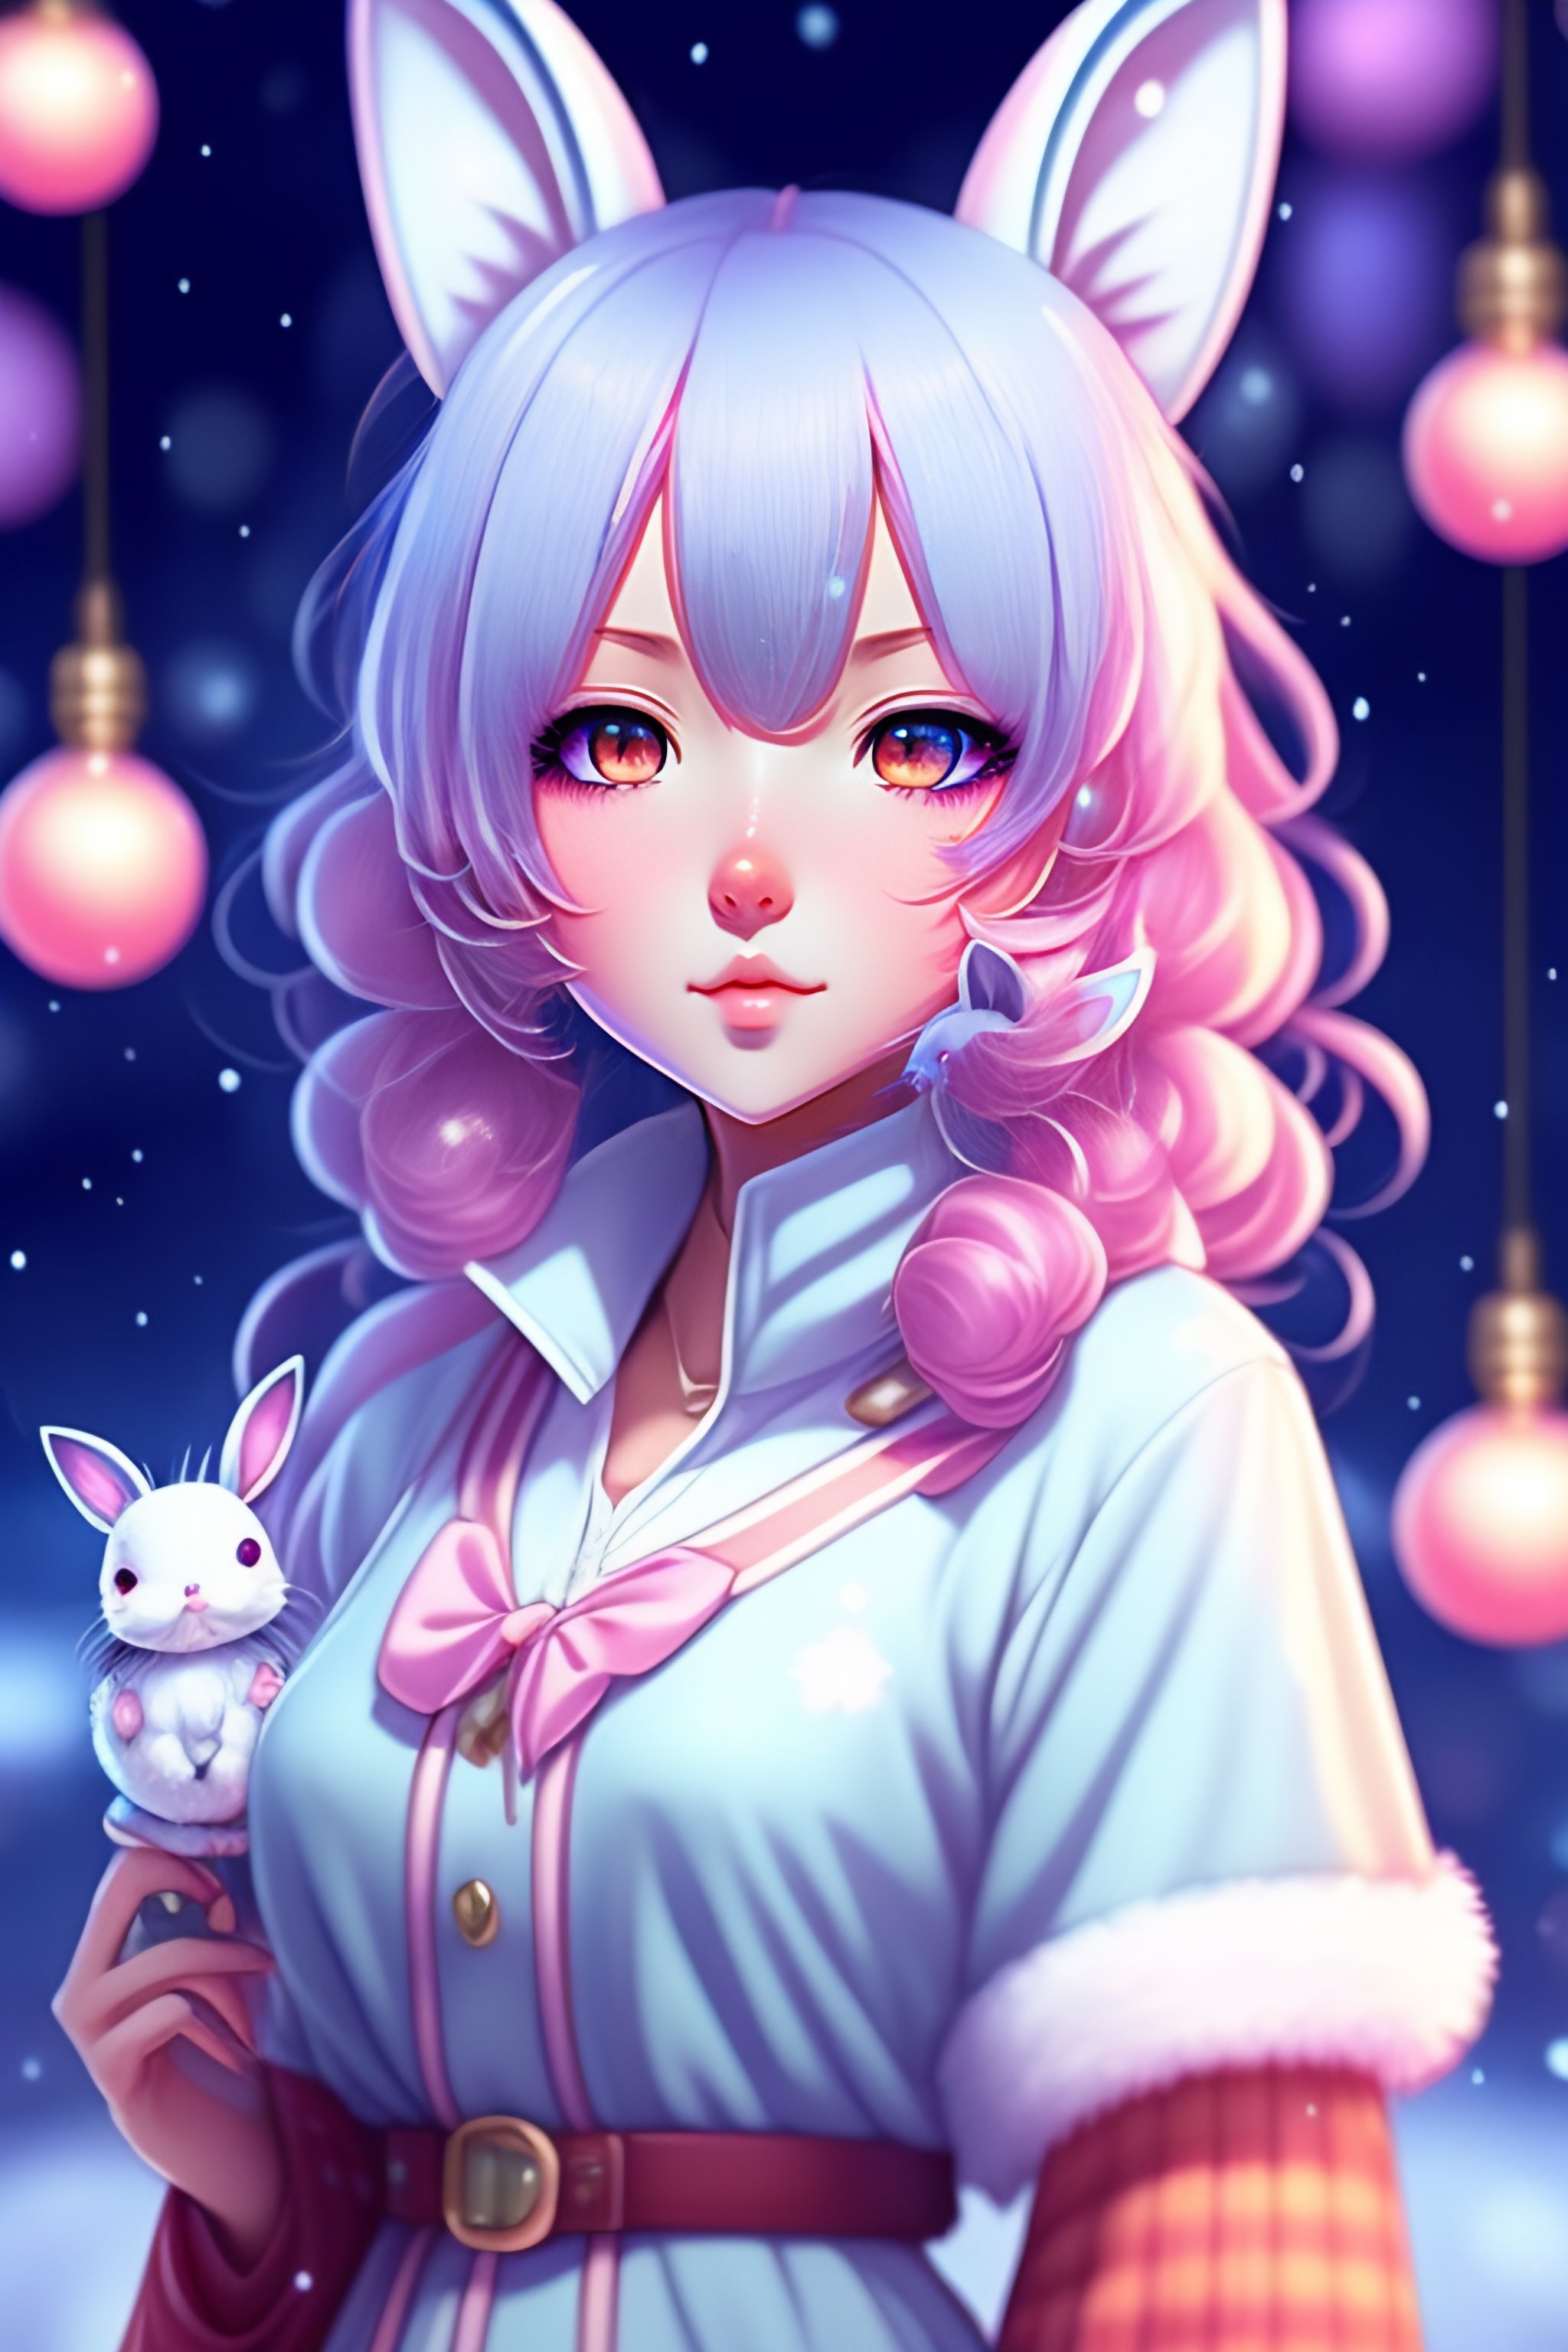 Lexica - Anime,wallpaper like pencil drawing, digital art of cute kawaii  girl with rabbit ears, light blue hair,bob,pink eyes,holding a , background